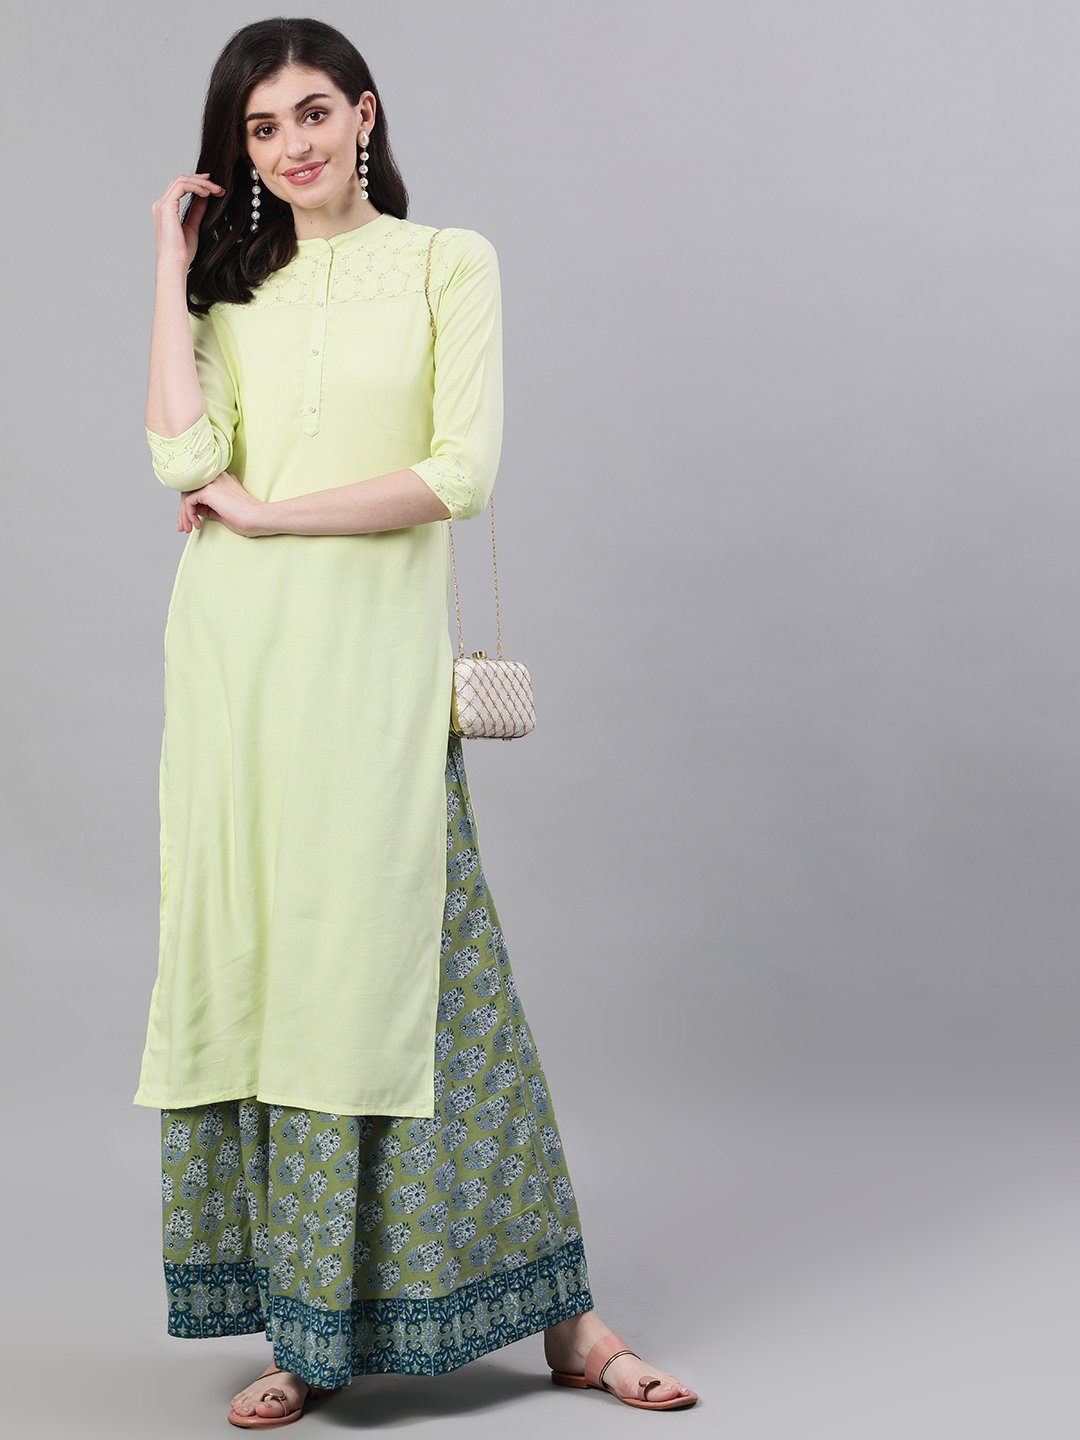 Women's Green Printed Maxi Skirt - Nayo Clothing